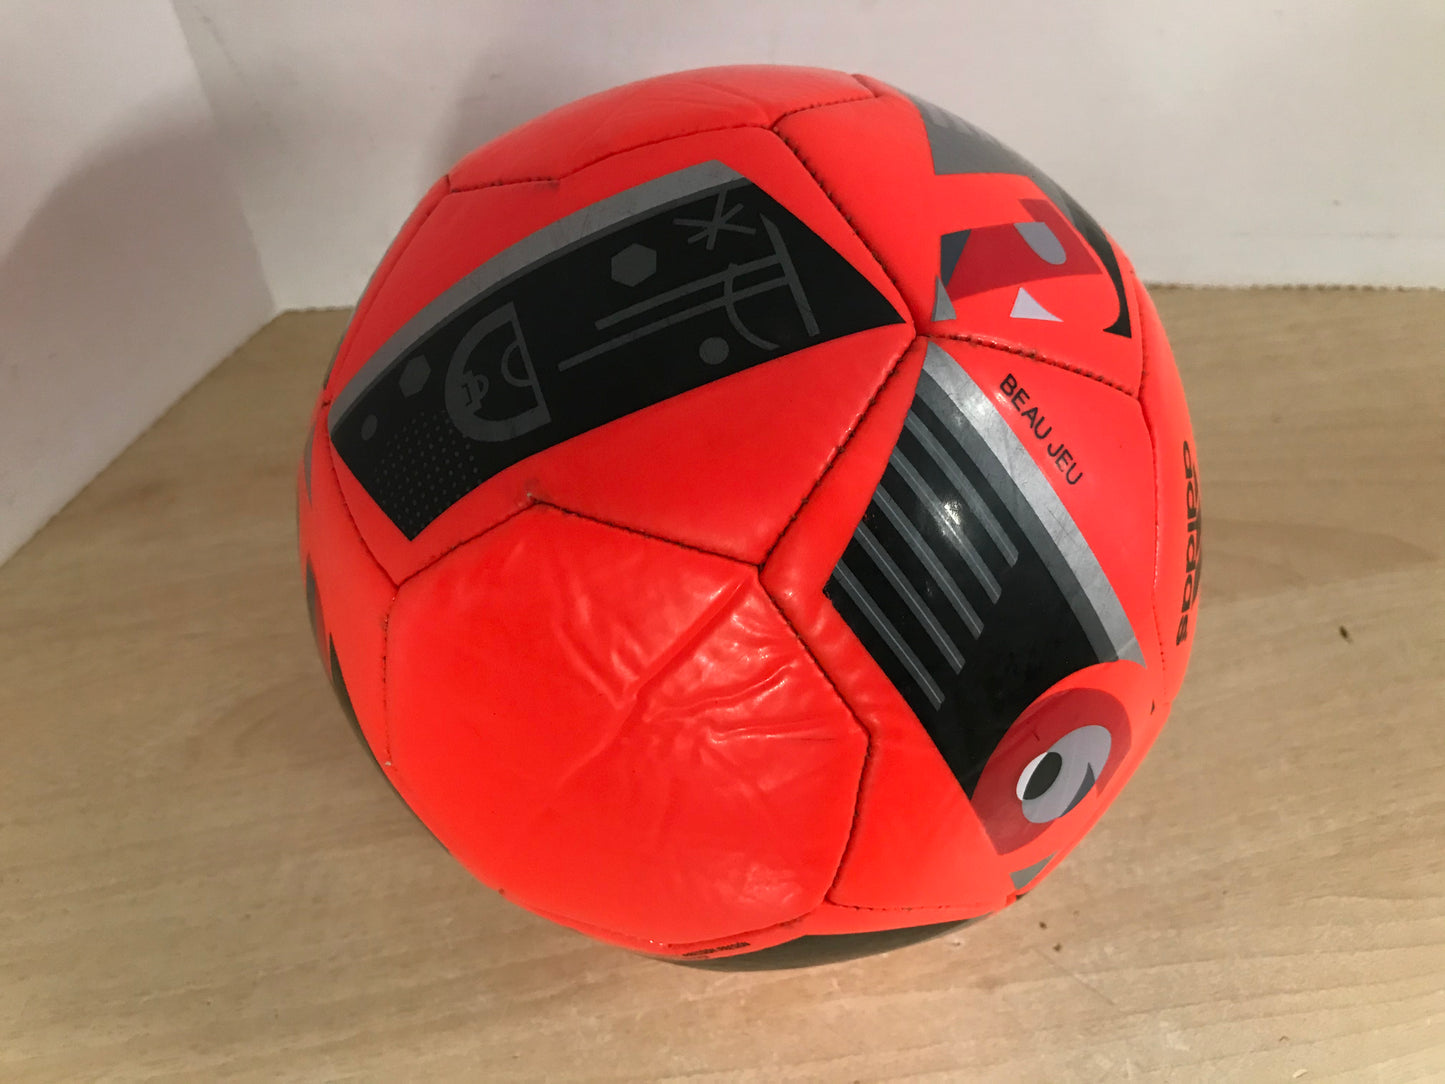 Soccer Ball Adidas  Brilliant Orange Black Red France 2016 Excellent